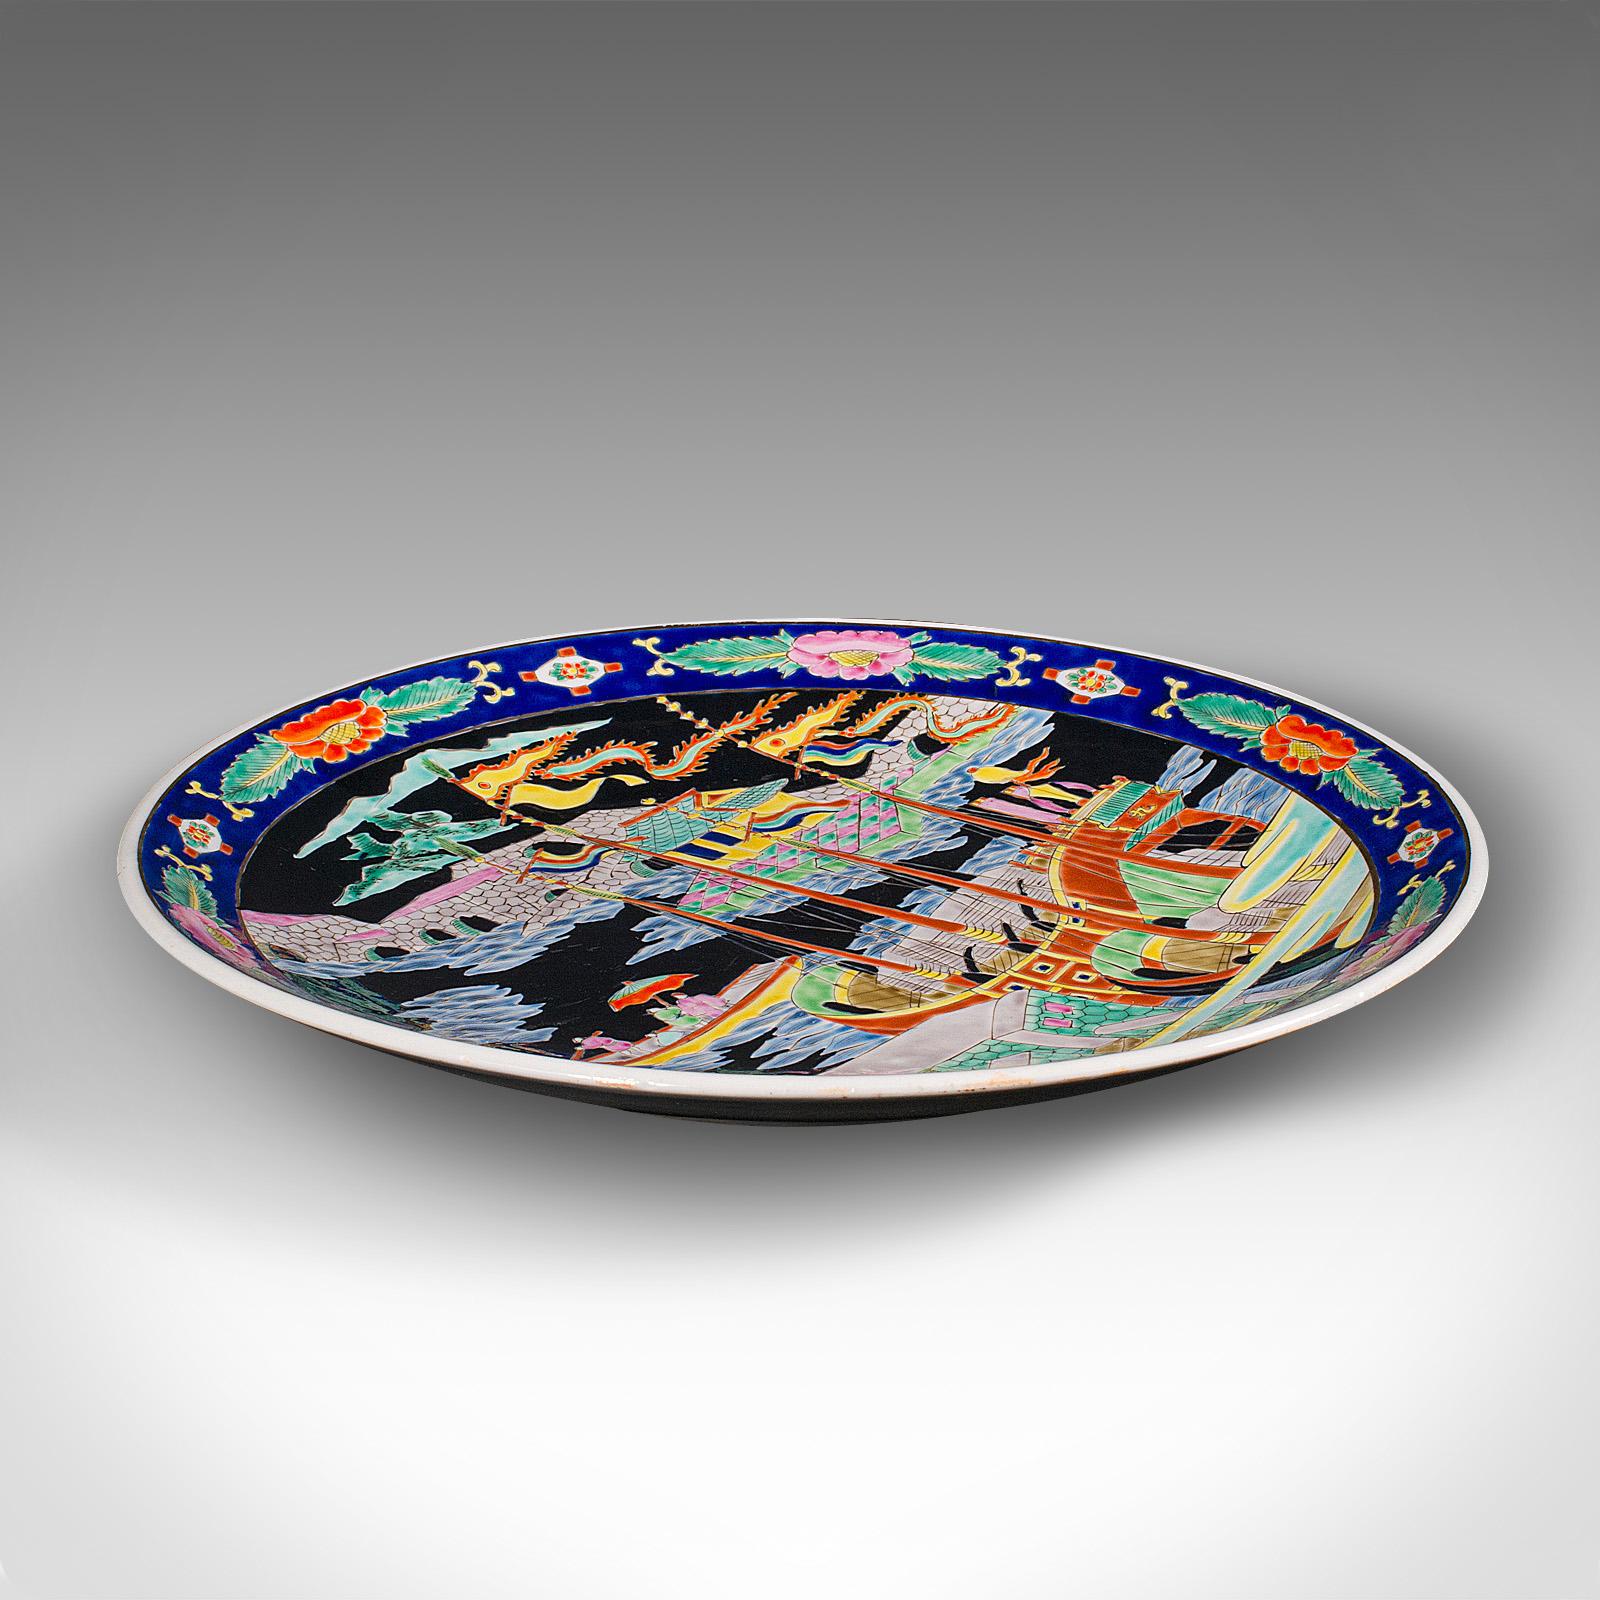 Large Vintage Imari Plate, Japanese, Ceramic Decorative Charger, Art Deco, 1930 For Sale 3